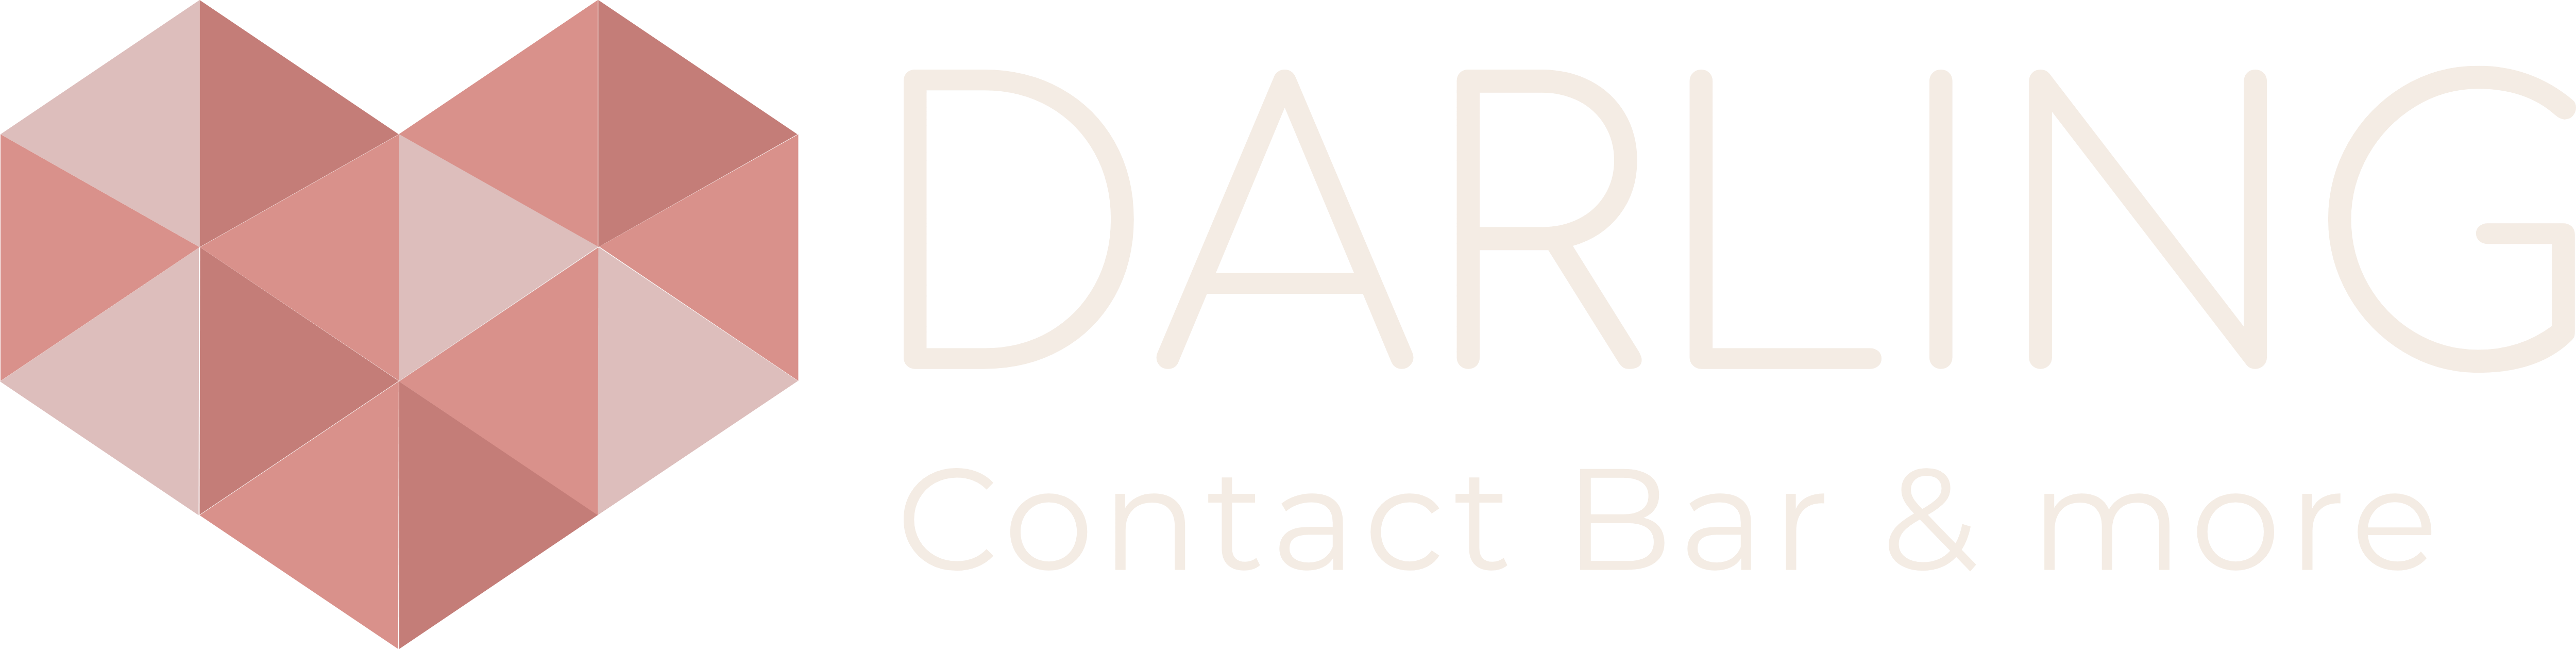 DARLING Contact Bar & more 